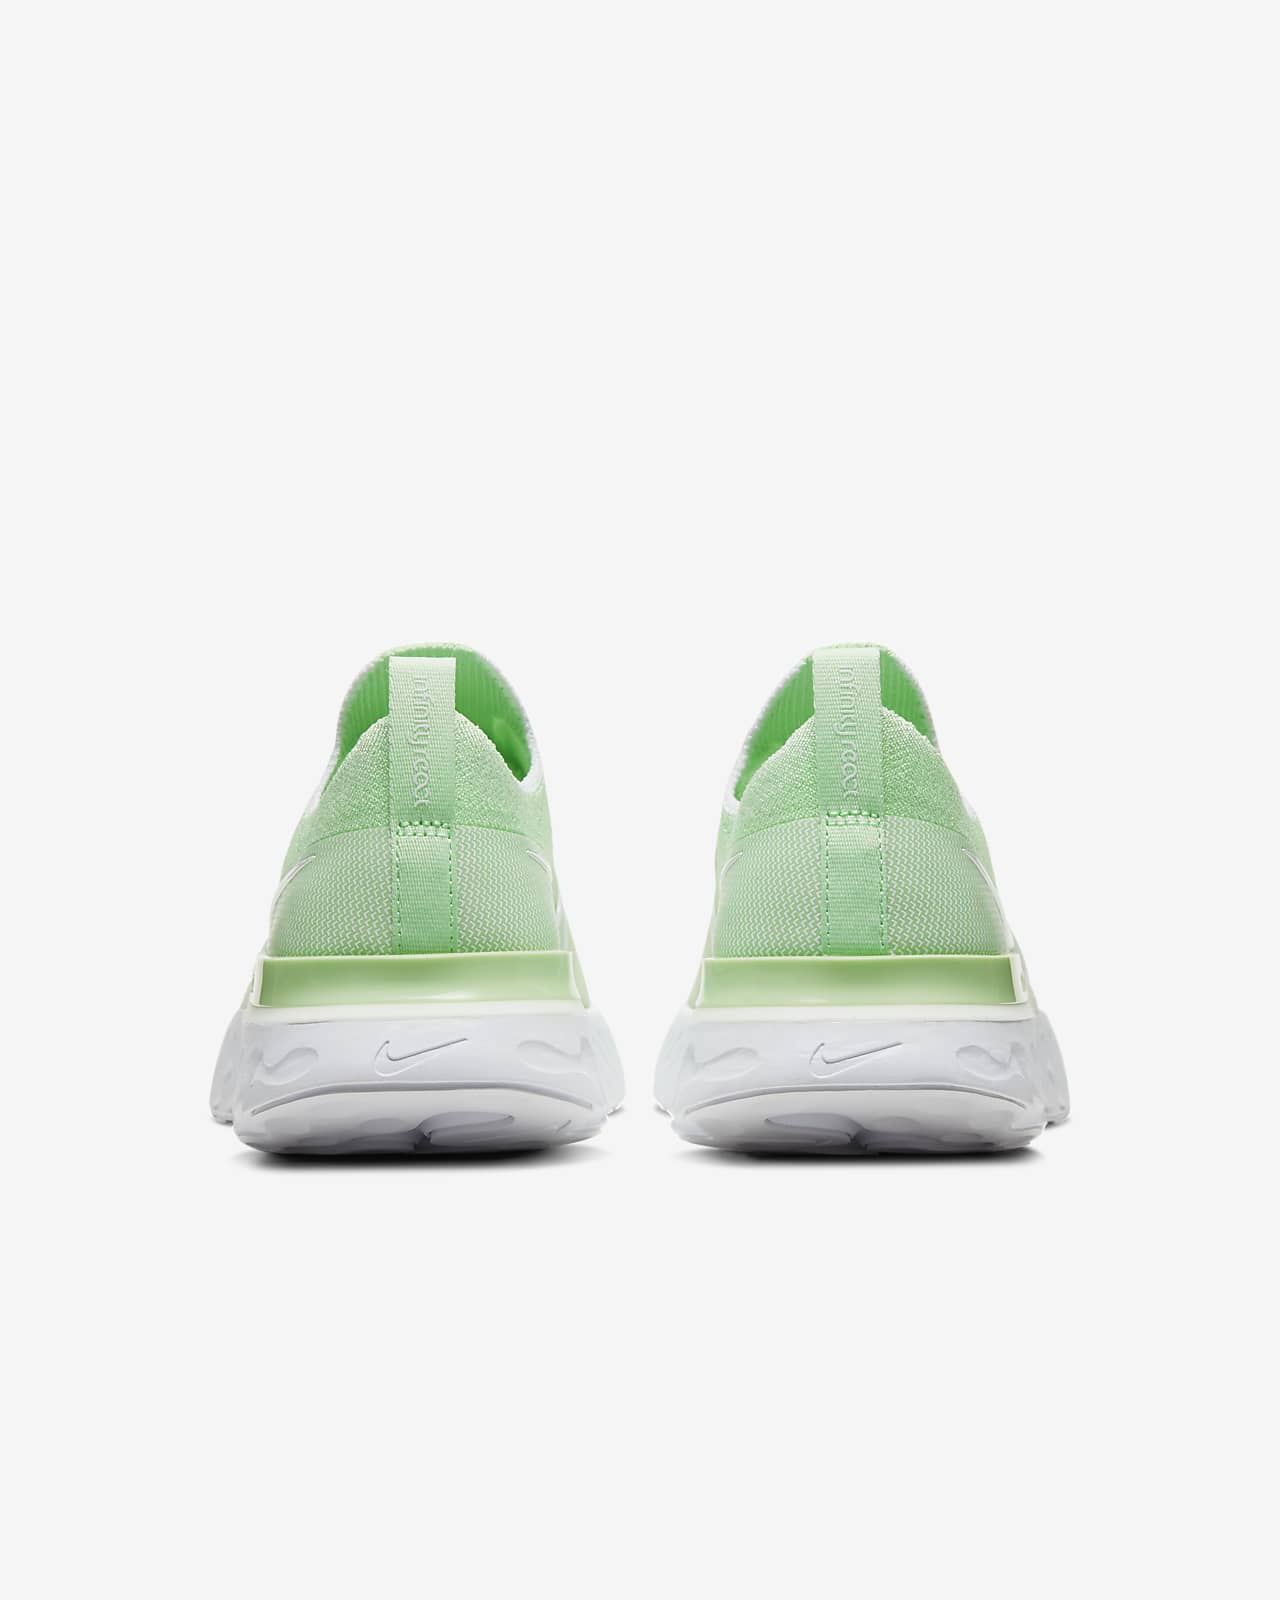 nike mint green running shoes